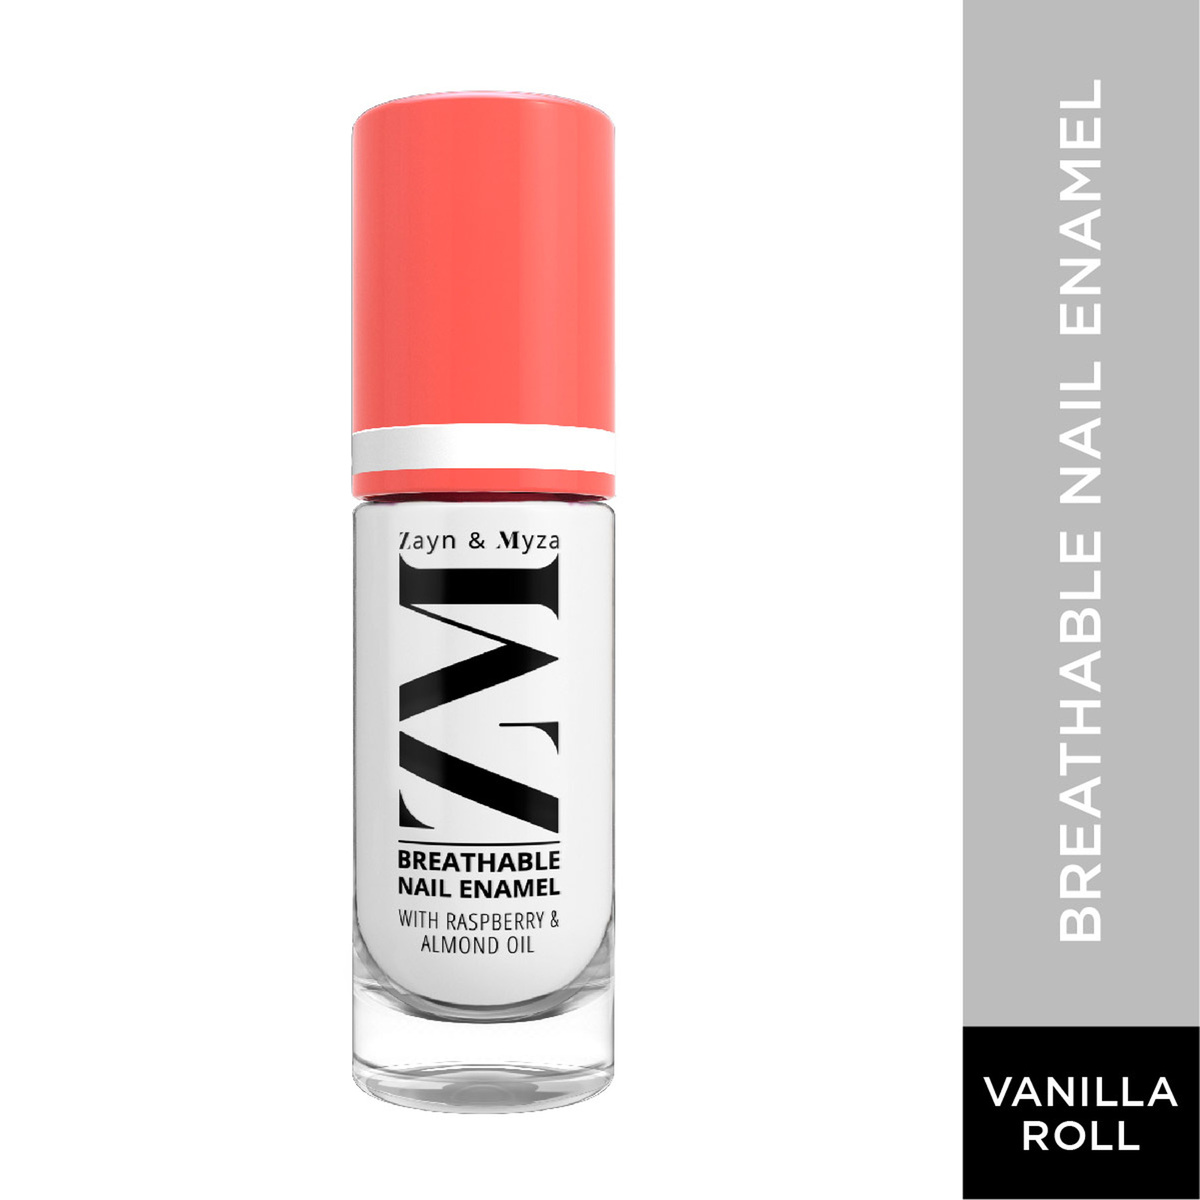 Zayn & Myza Breathable High Gloss Nail Polish, 6 ml, Vanilla Roll